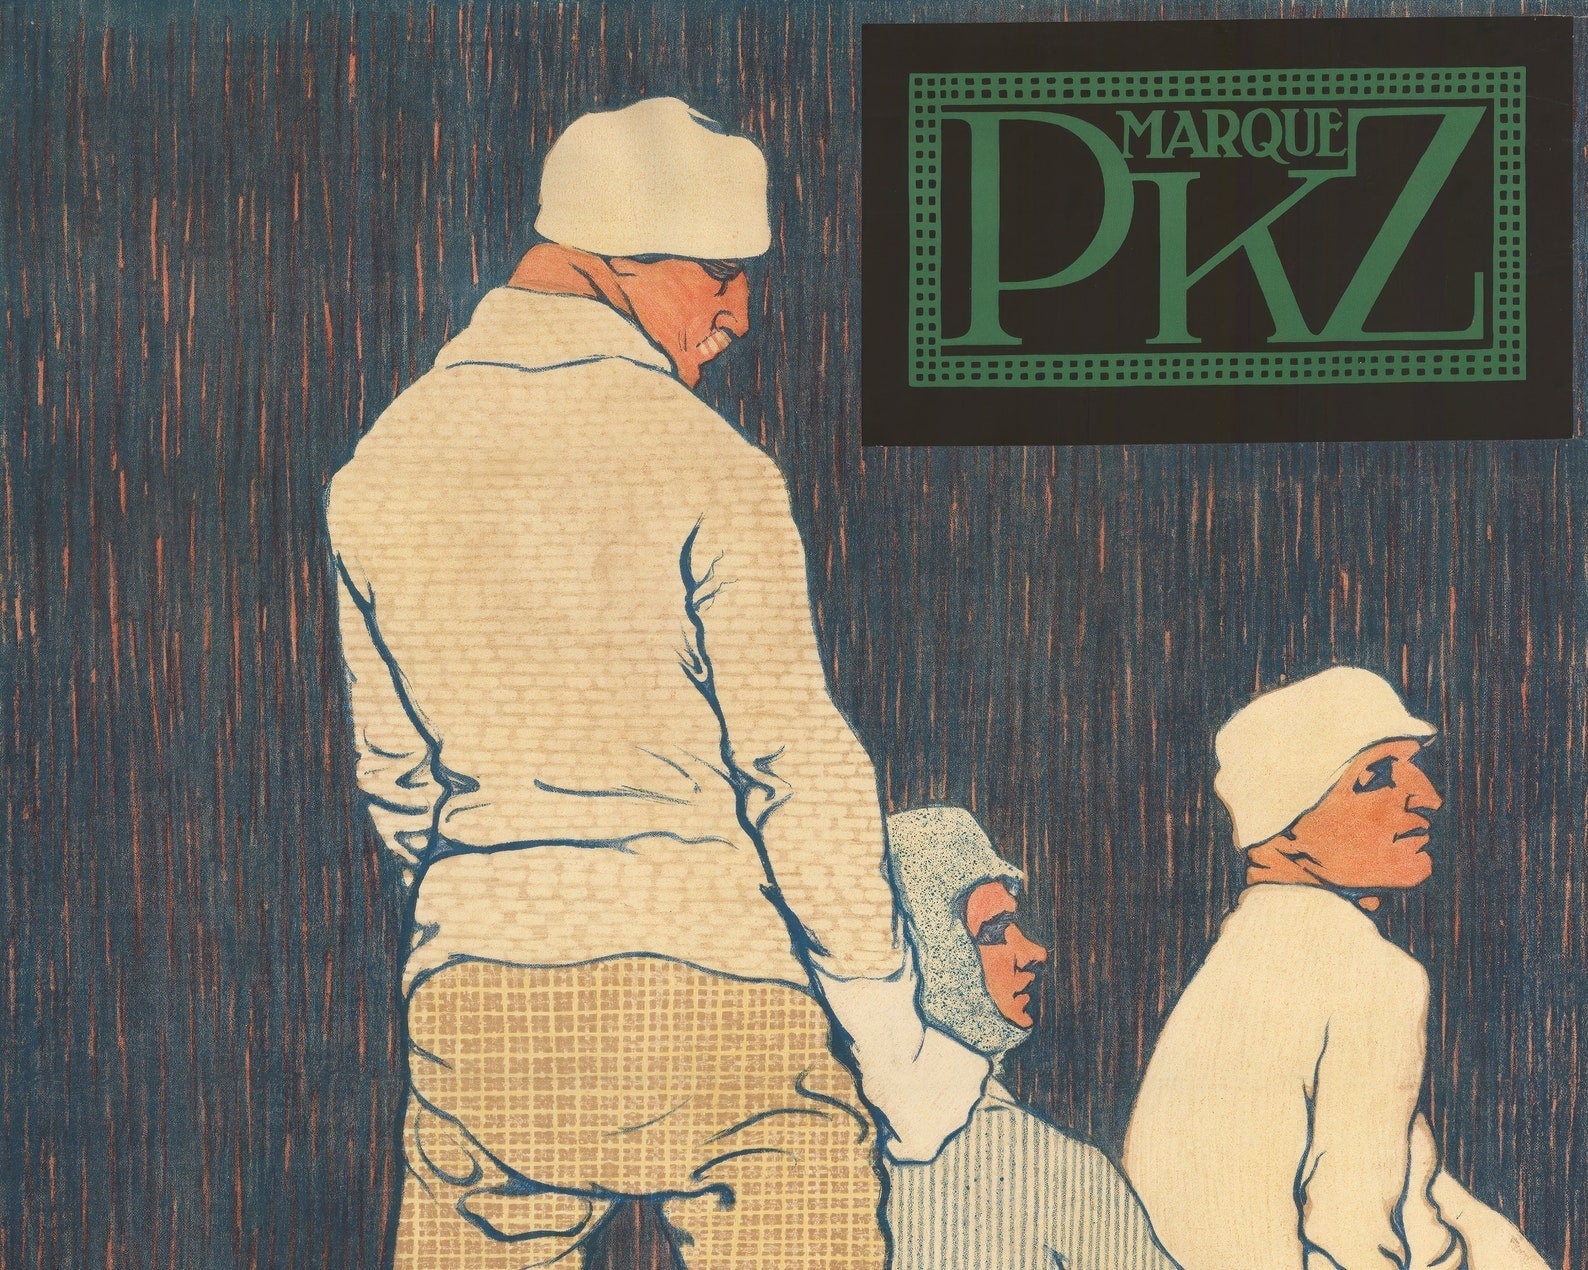 Burkhard Mangold "Marque PKZ" (c.1910) Vintage Men's Fashion Advertisement - Mabon Gallery